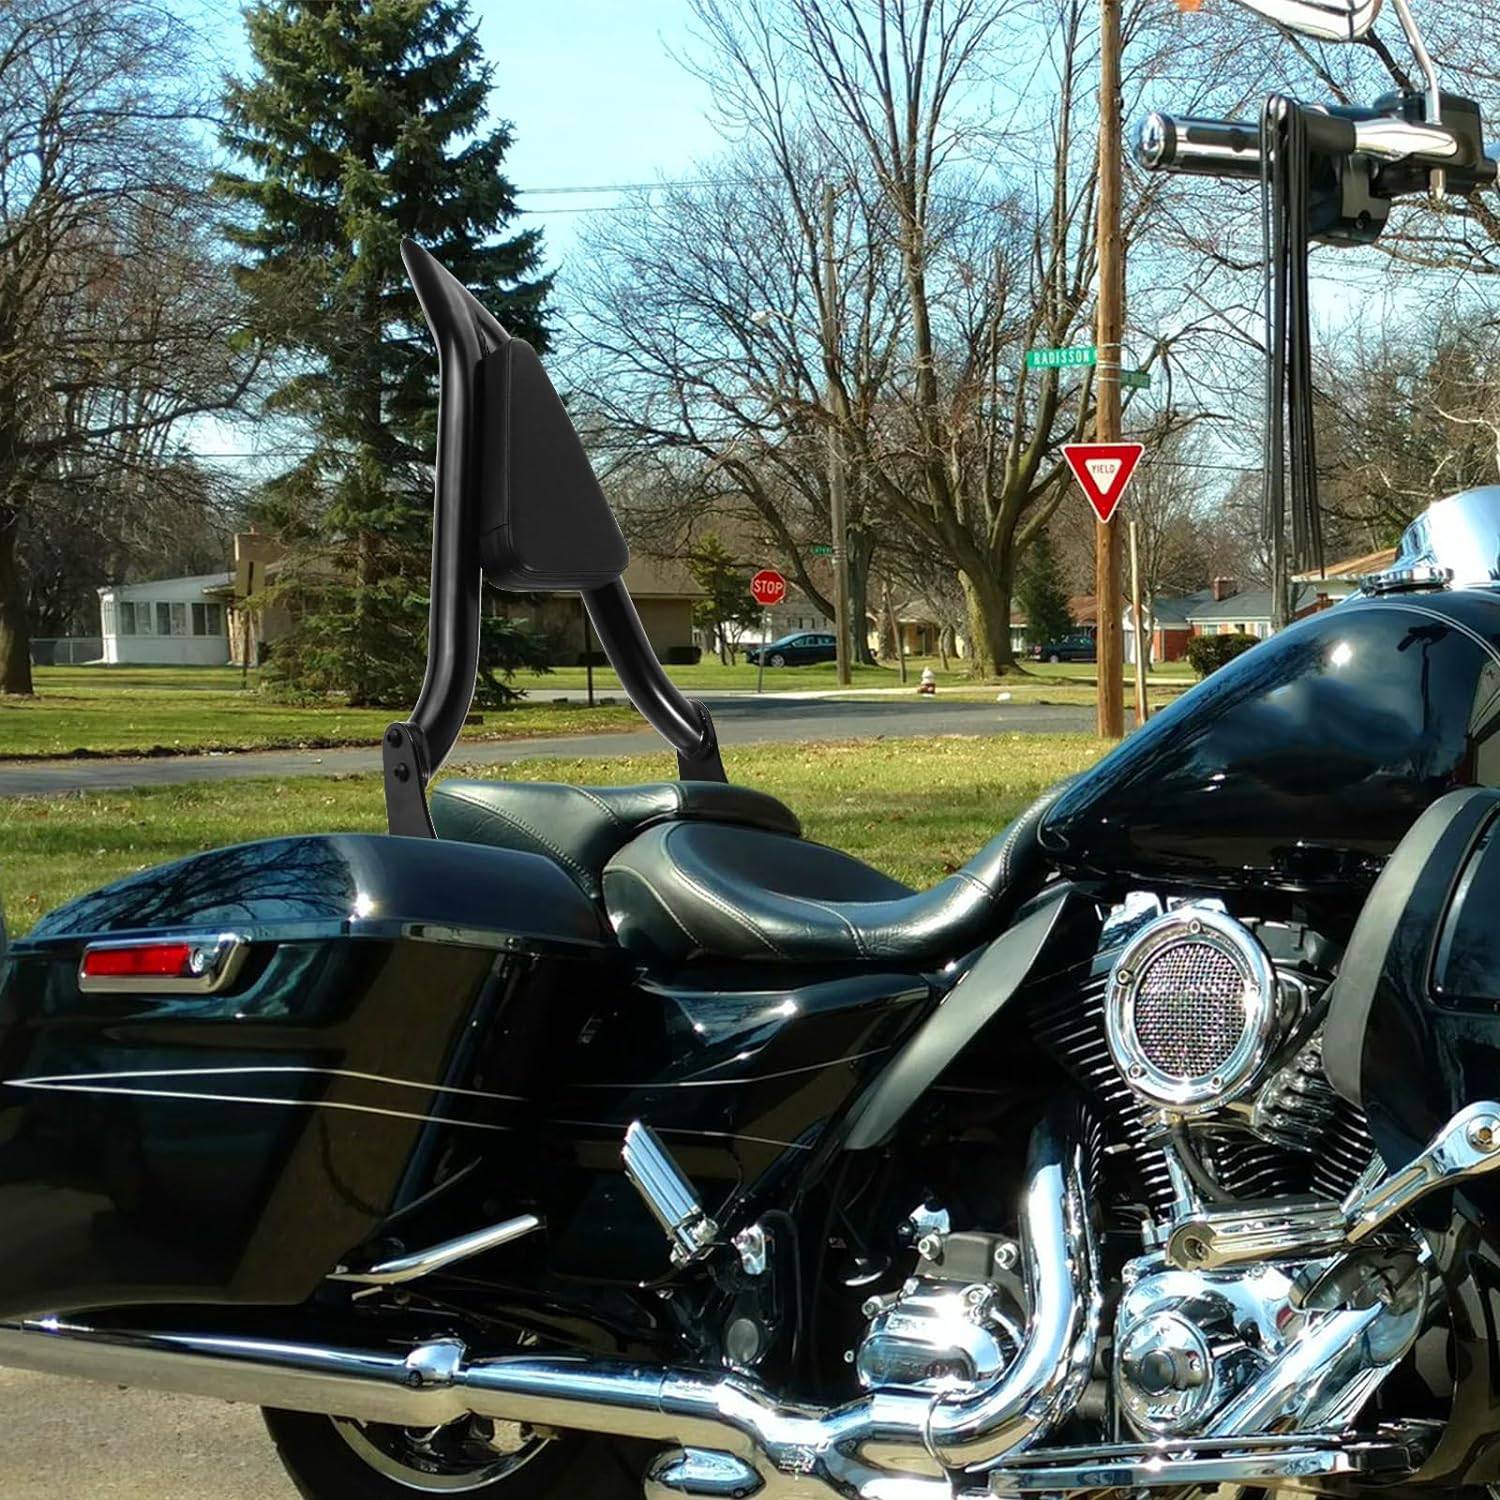 Harley Davidson Road King Detachable 16\" Sissy Bar with Pointed Backrest